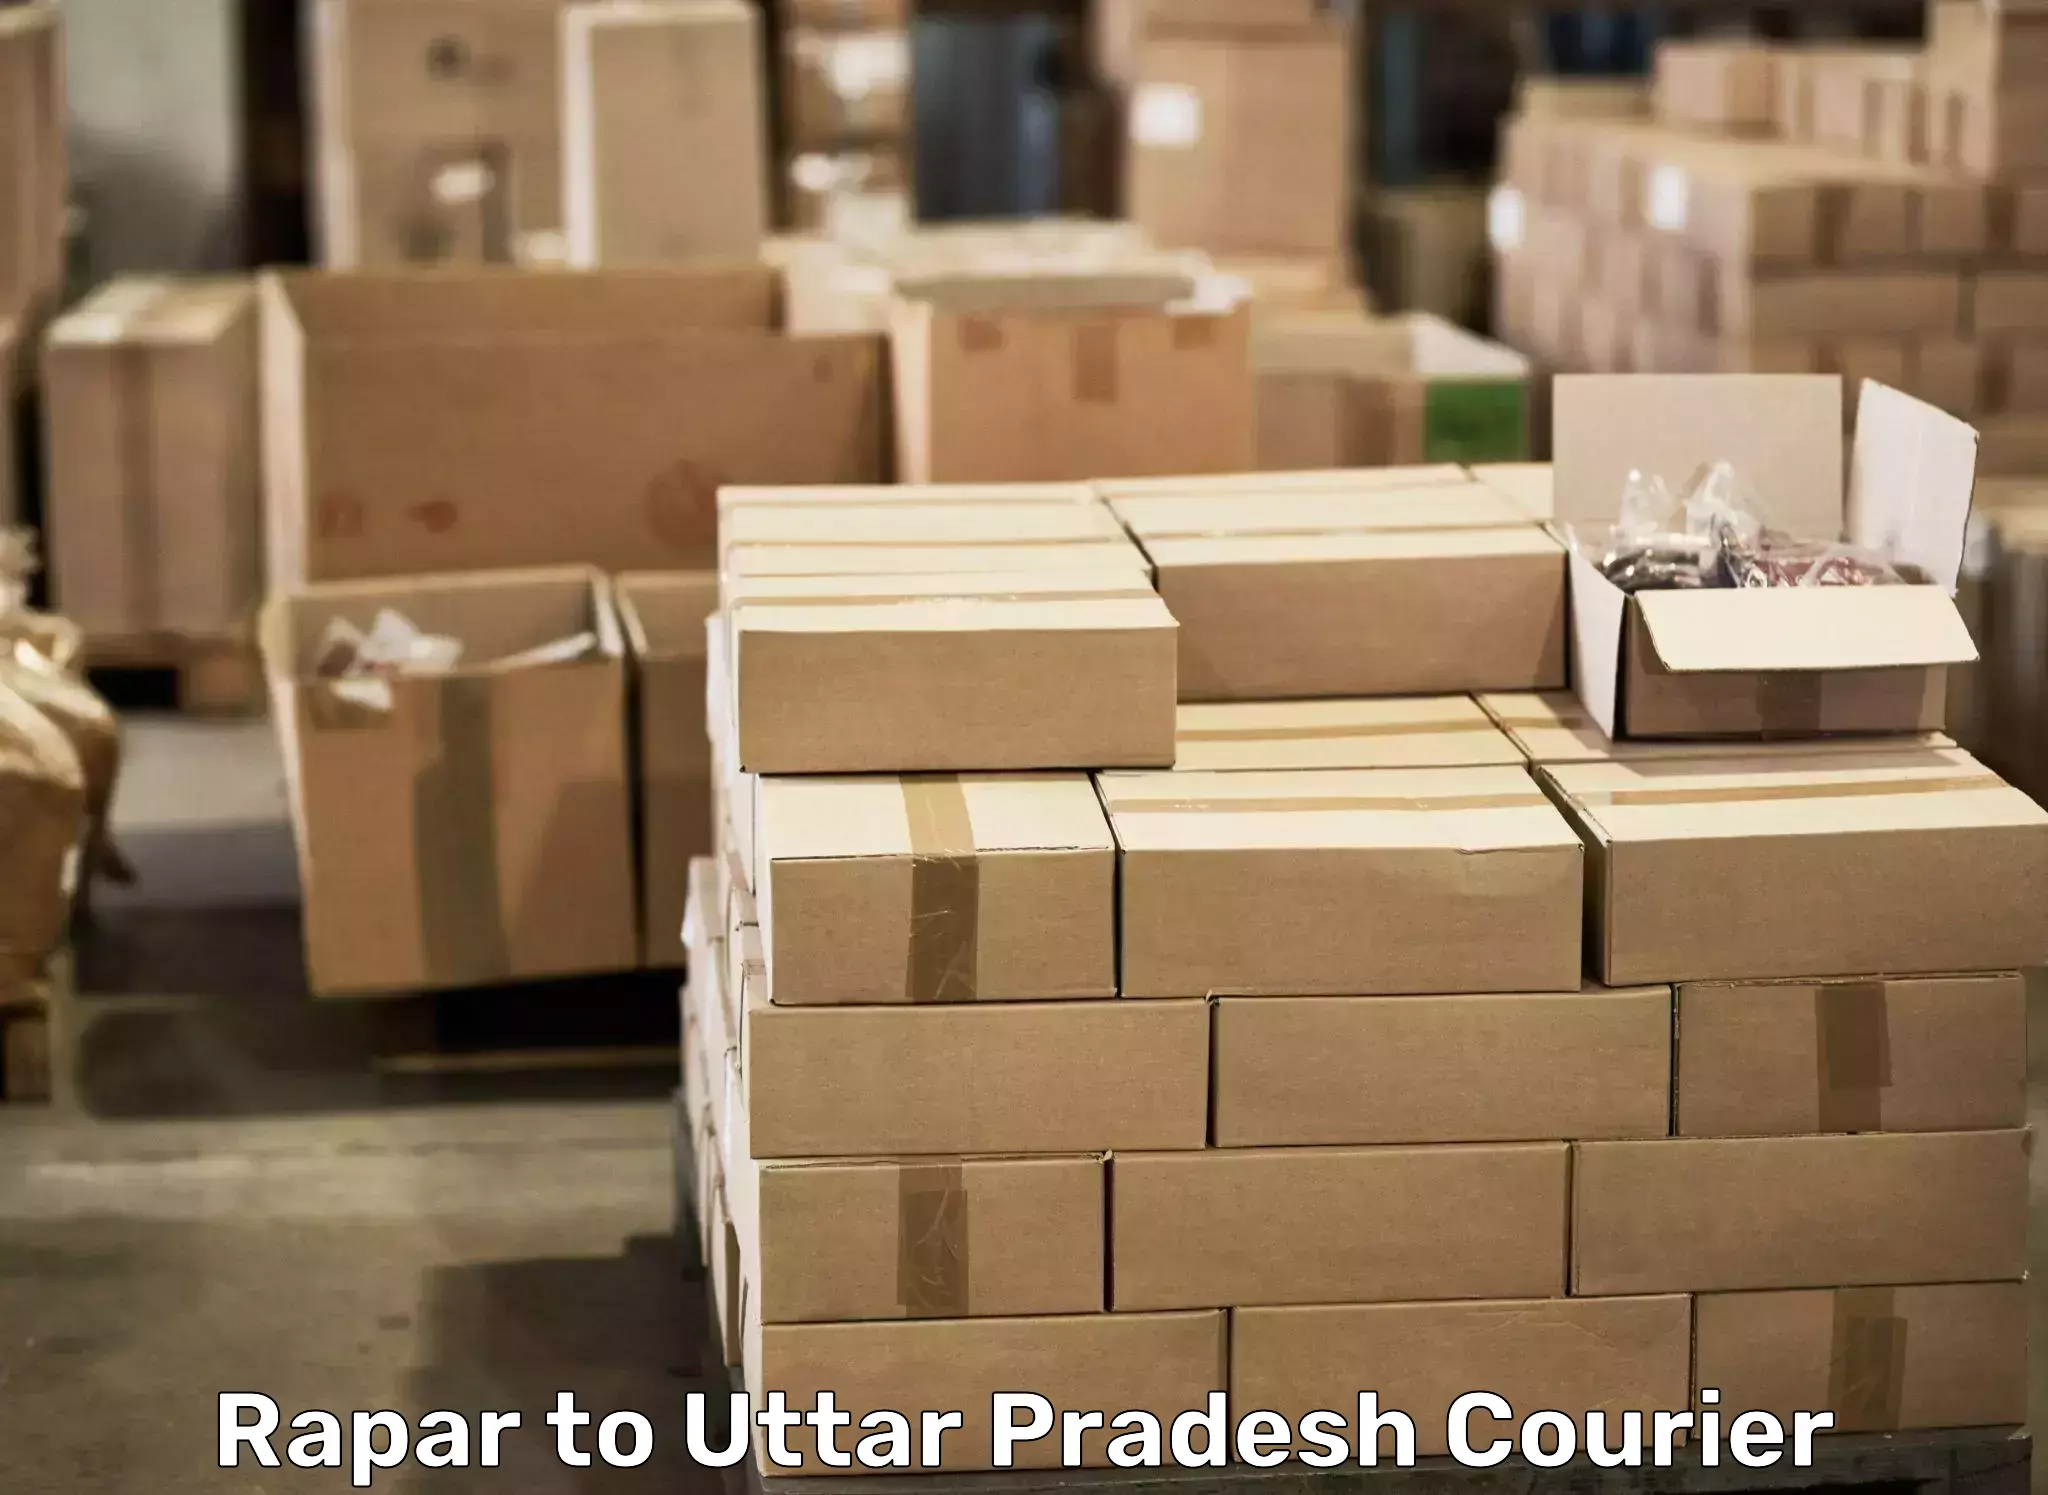 Specialized moving company Rapar to Pihani